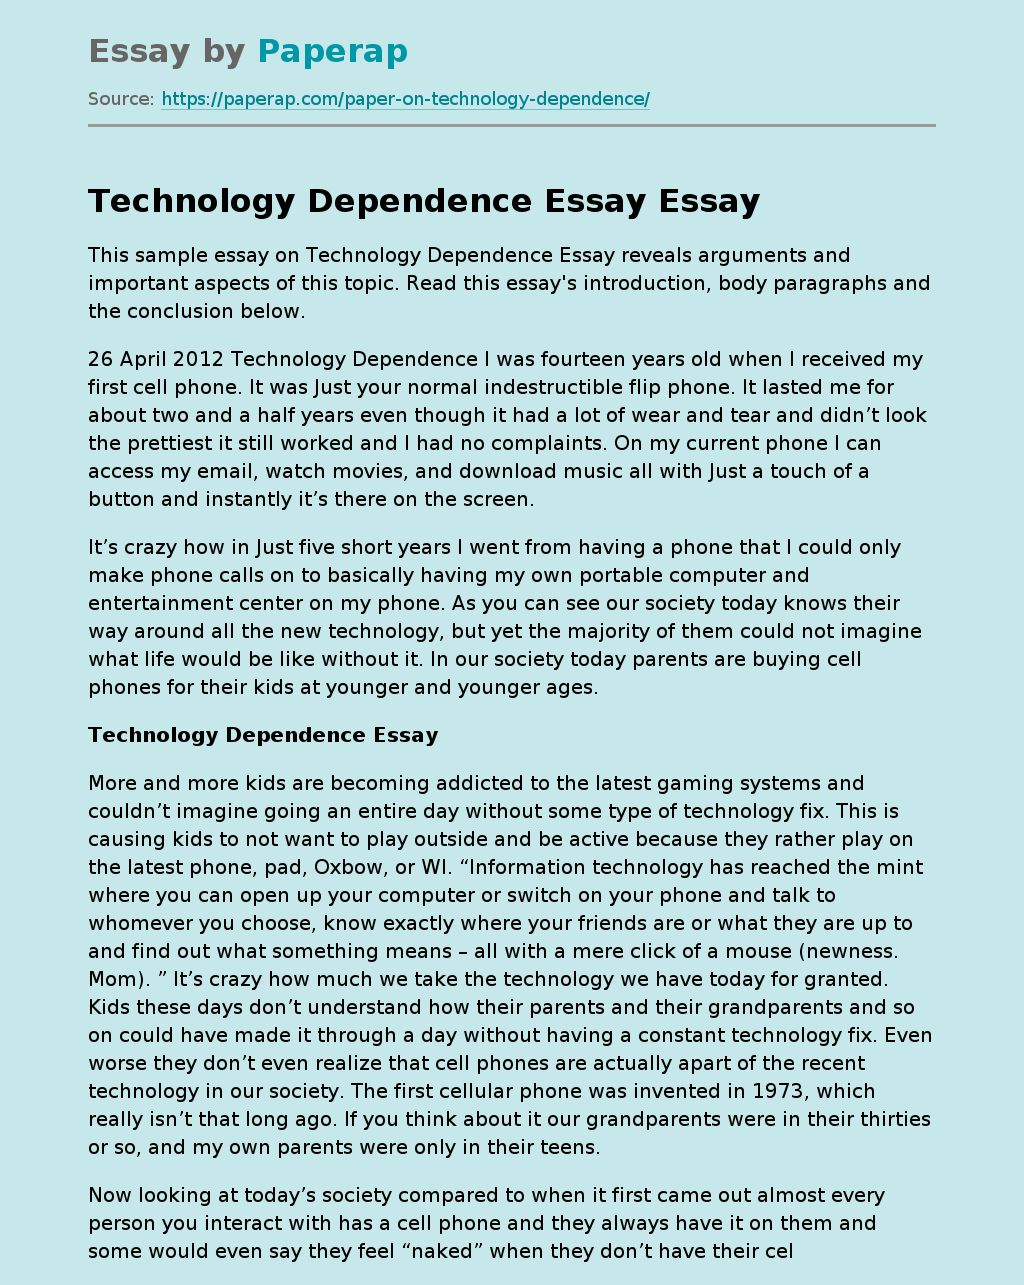 Technology Dependence Essay